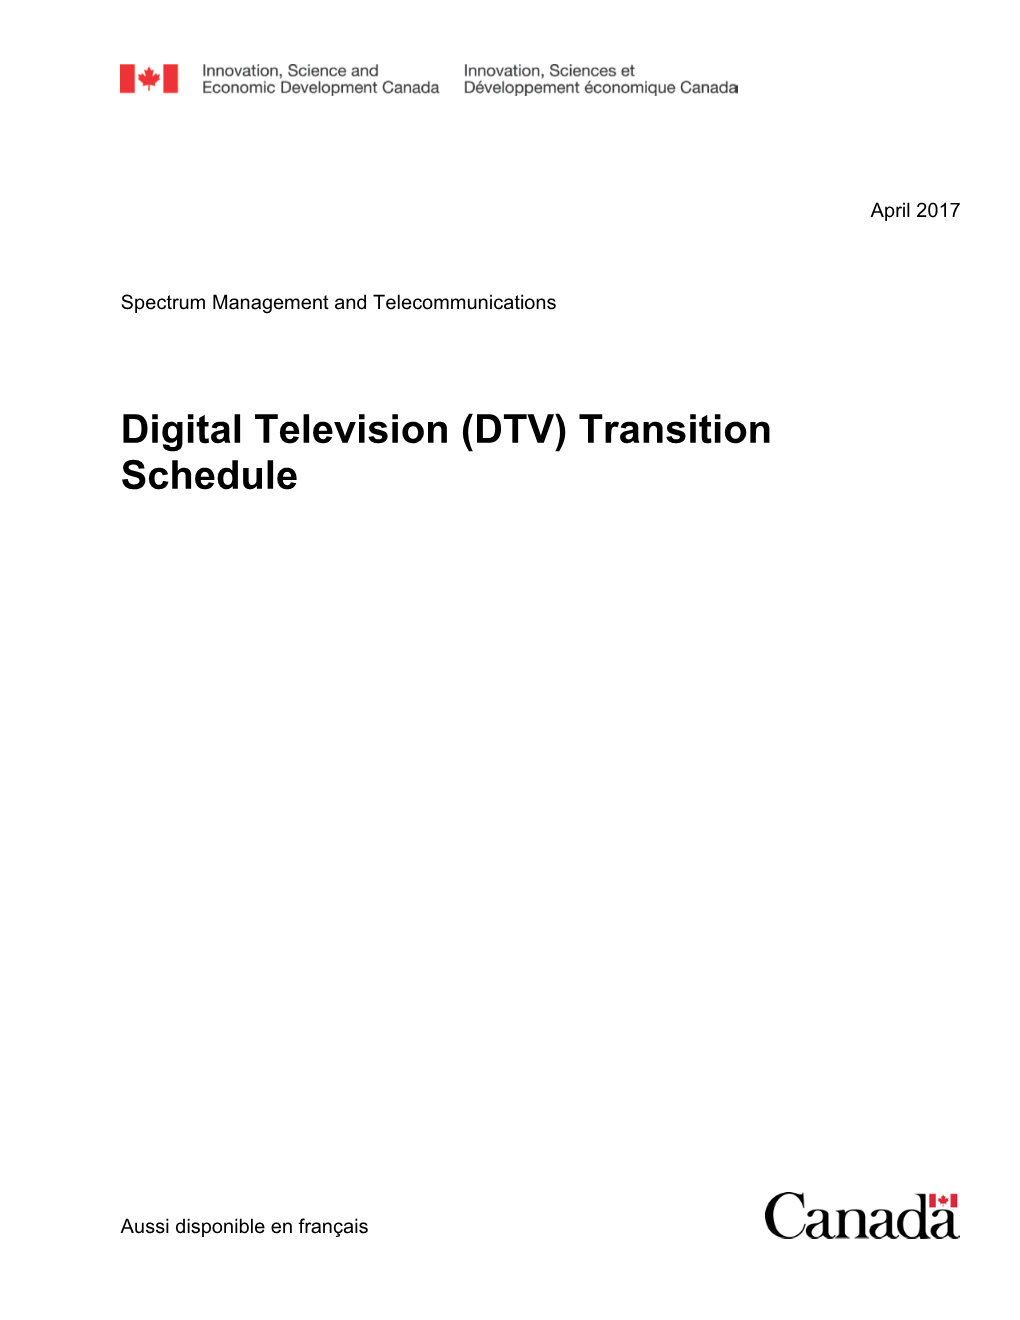 (DTV) Transition Schedule